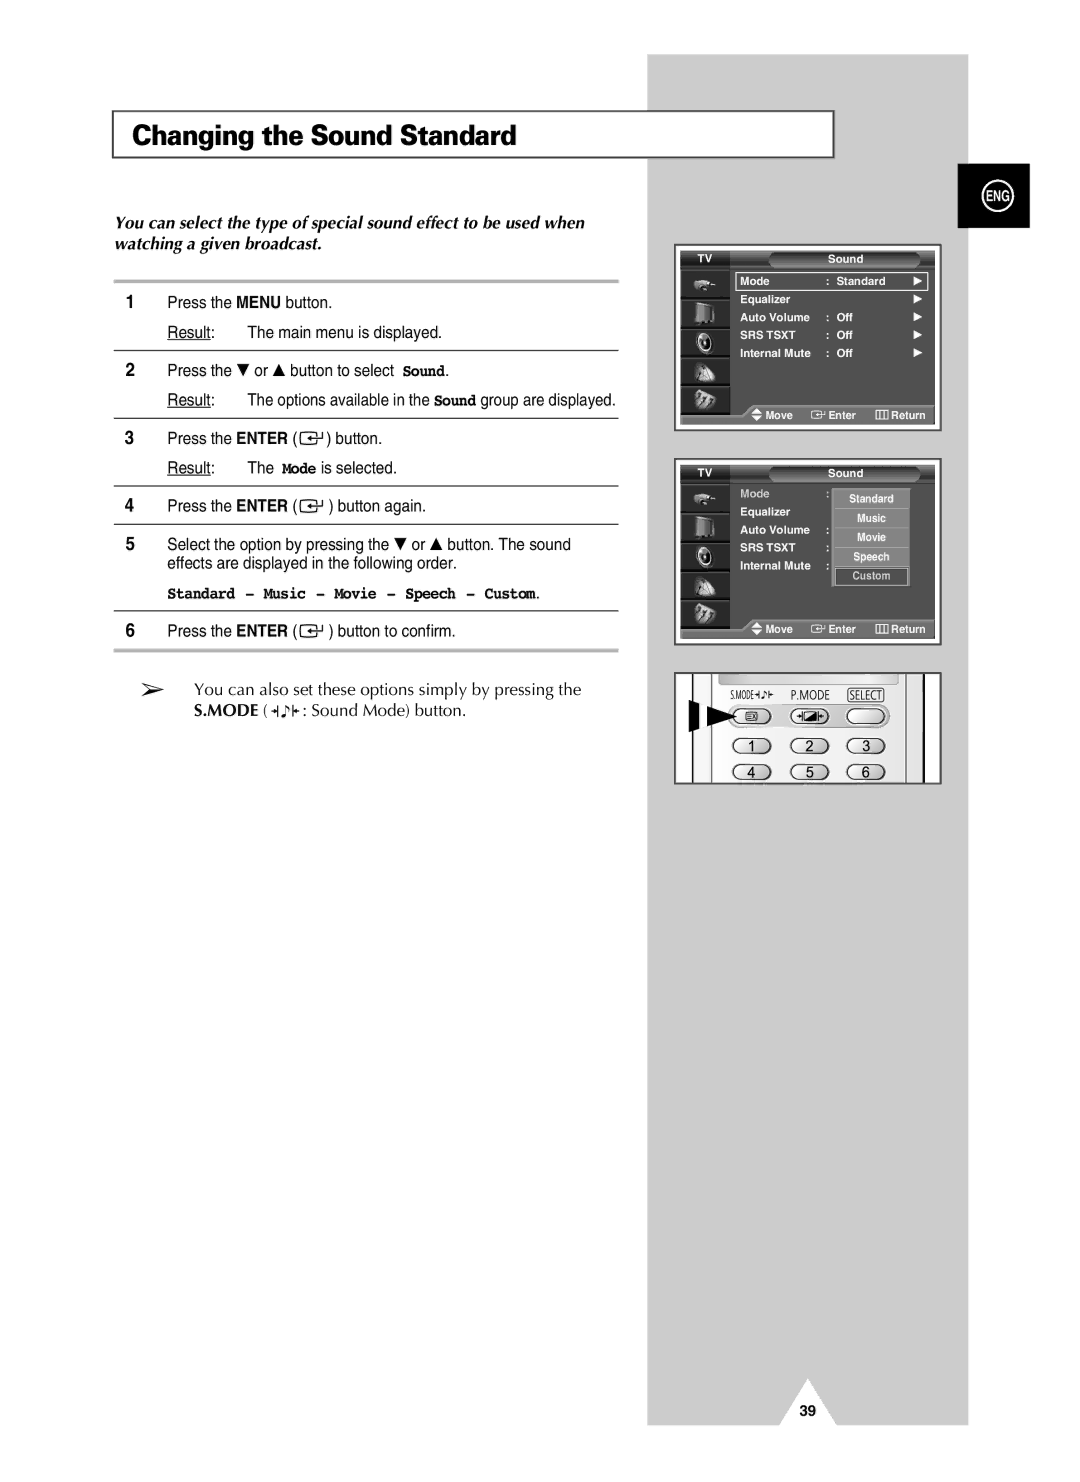 Samsung PS-37S4A manual Changing the Sound Standard, Standard Music Movie Speech Custom 